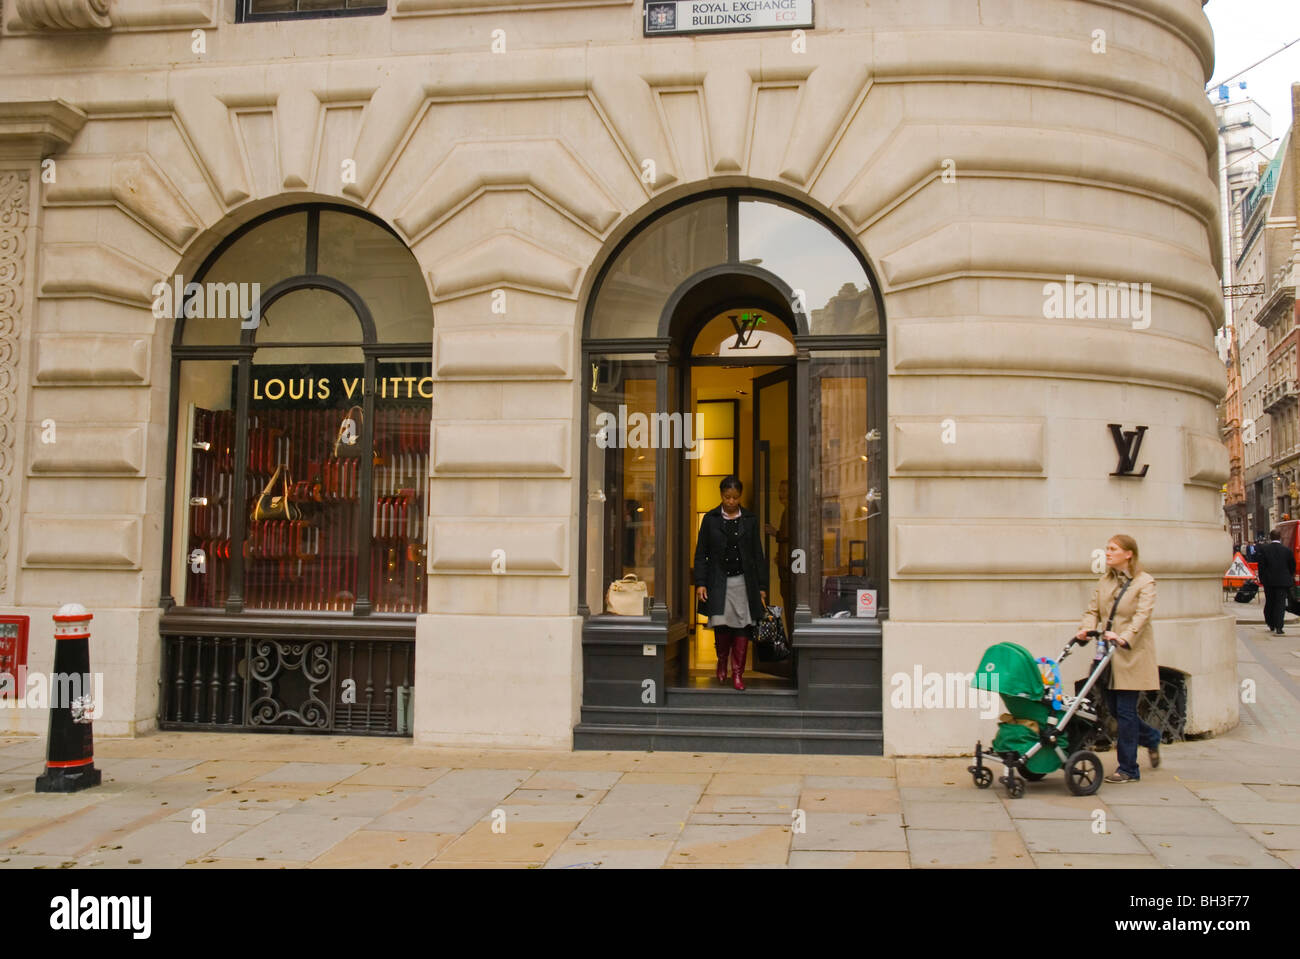 Louis Vuitton shop of London England Europe Photo - Alamy